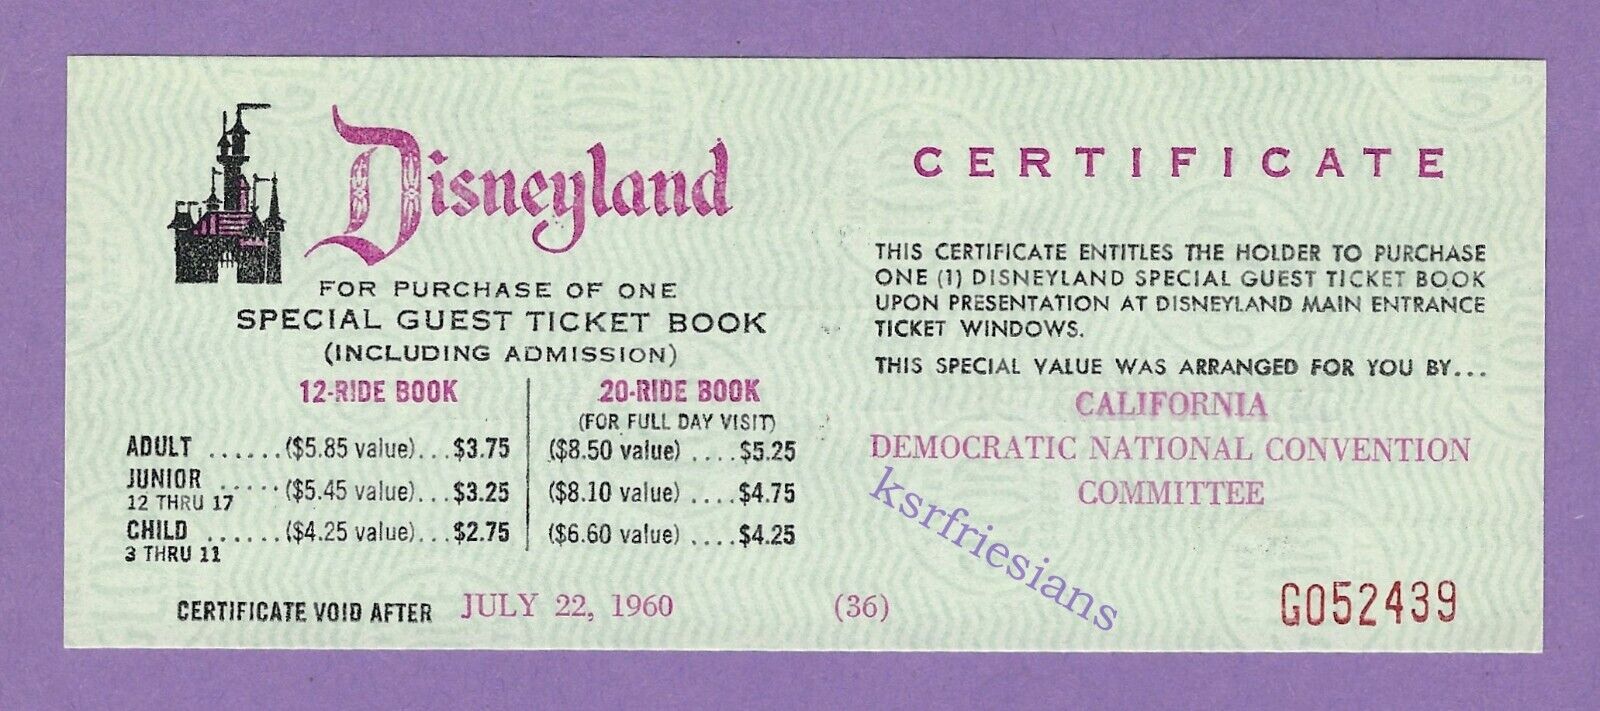 1960 DISNEYLAND Democratic National Convention Certificate DISNEY TICKET PASS